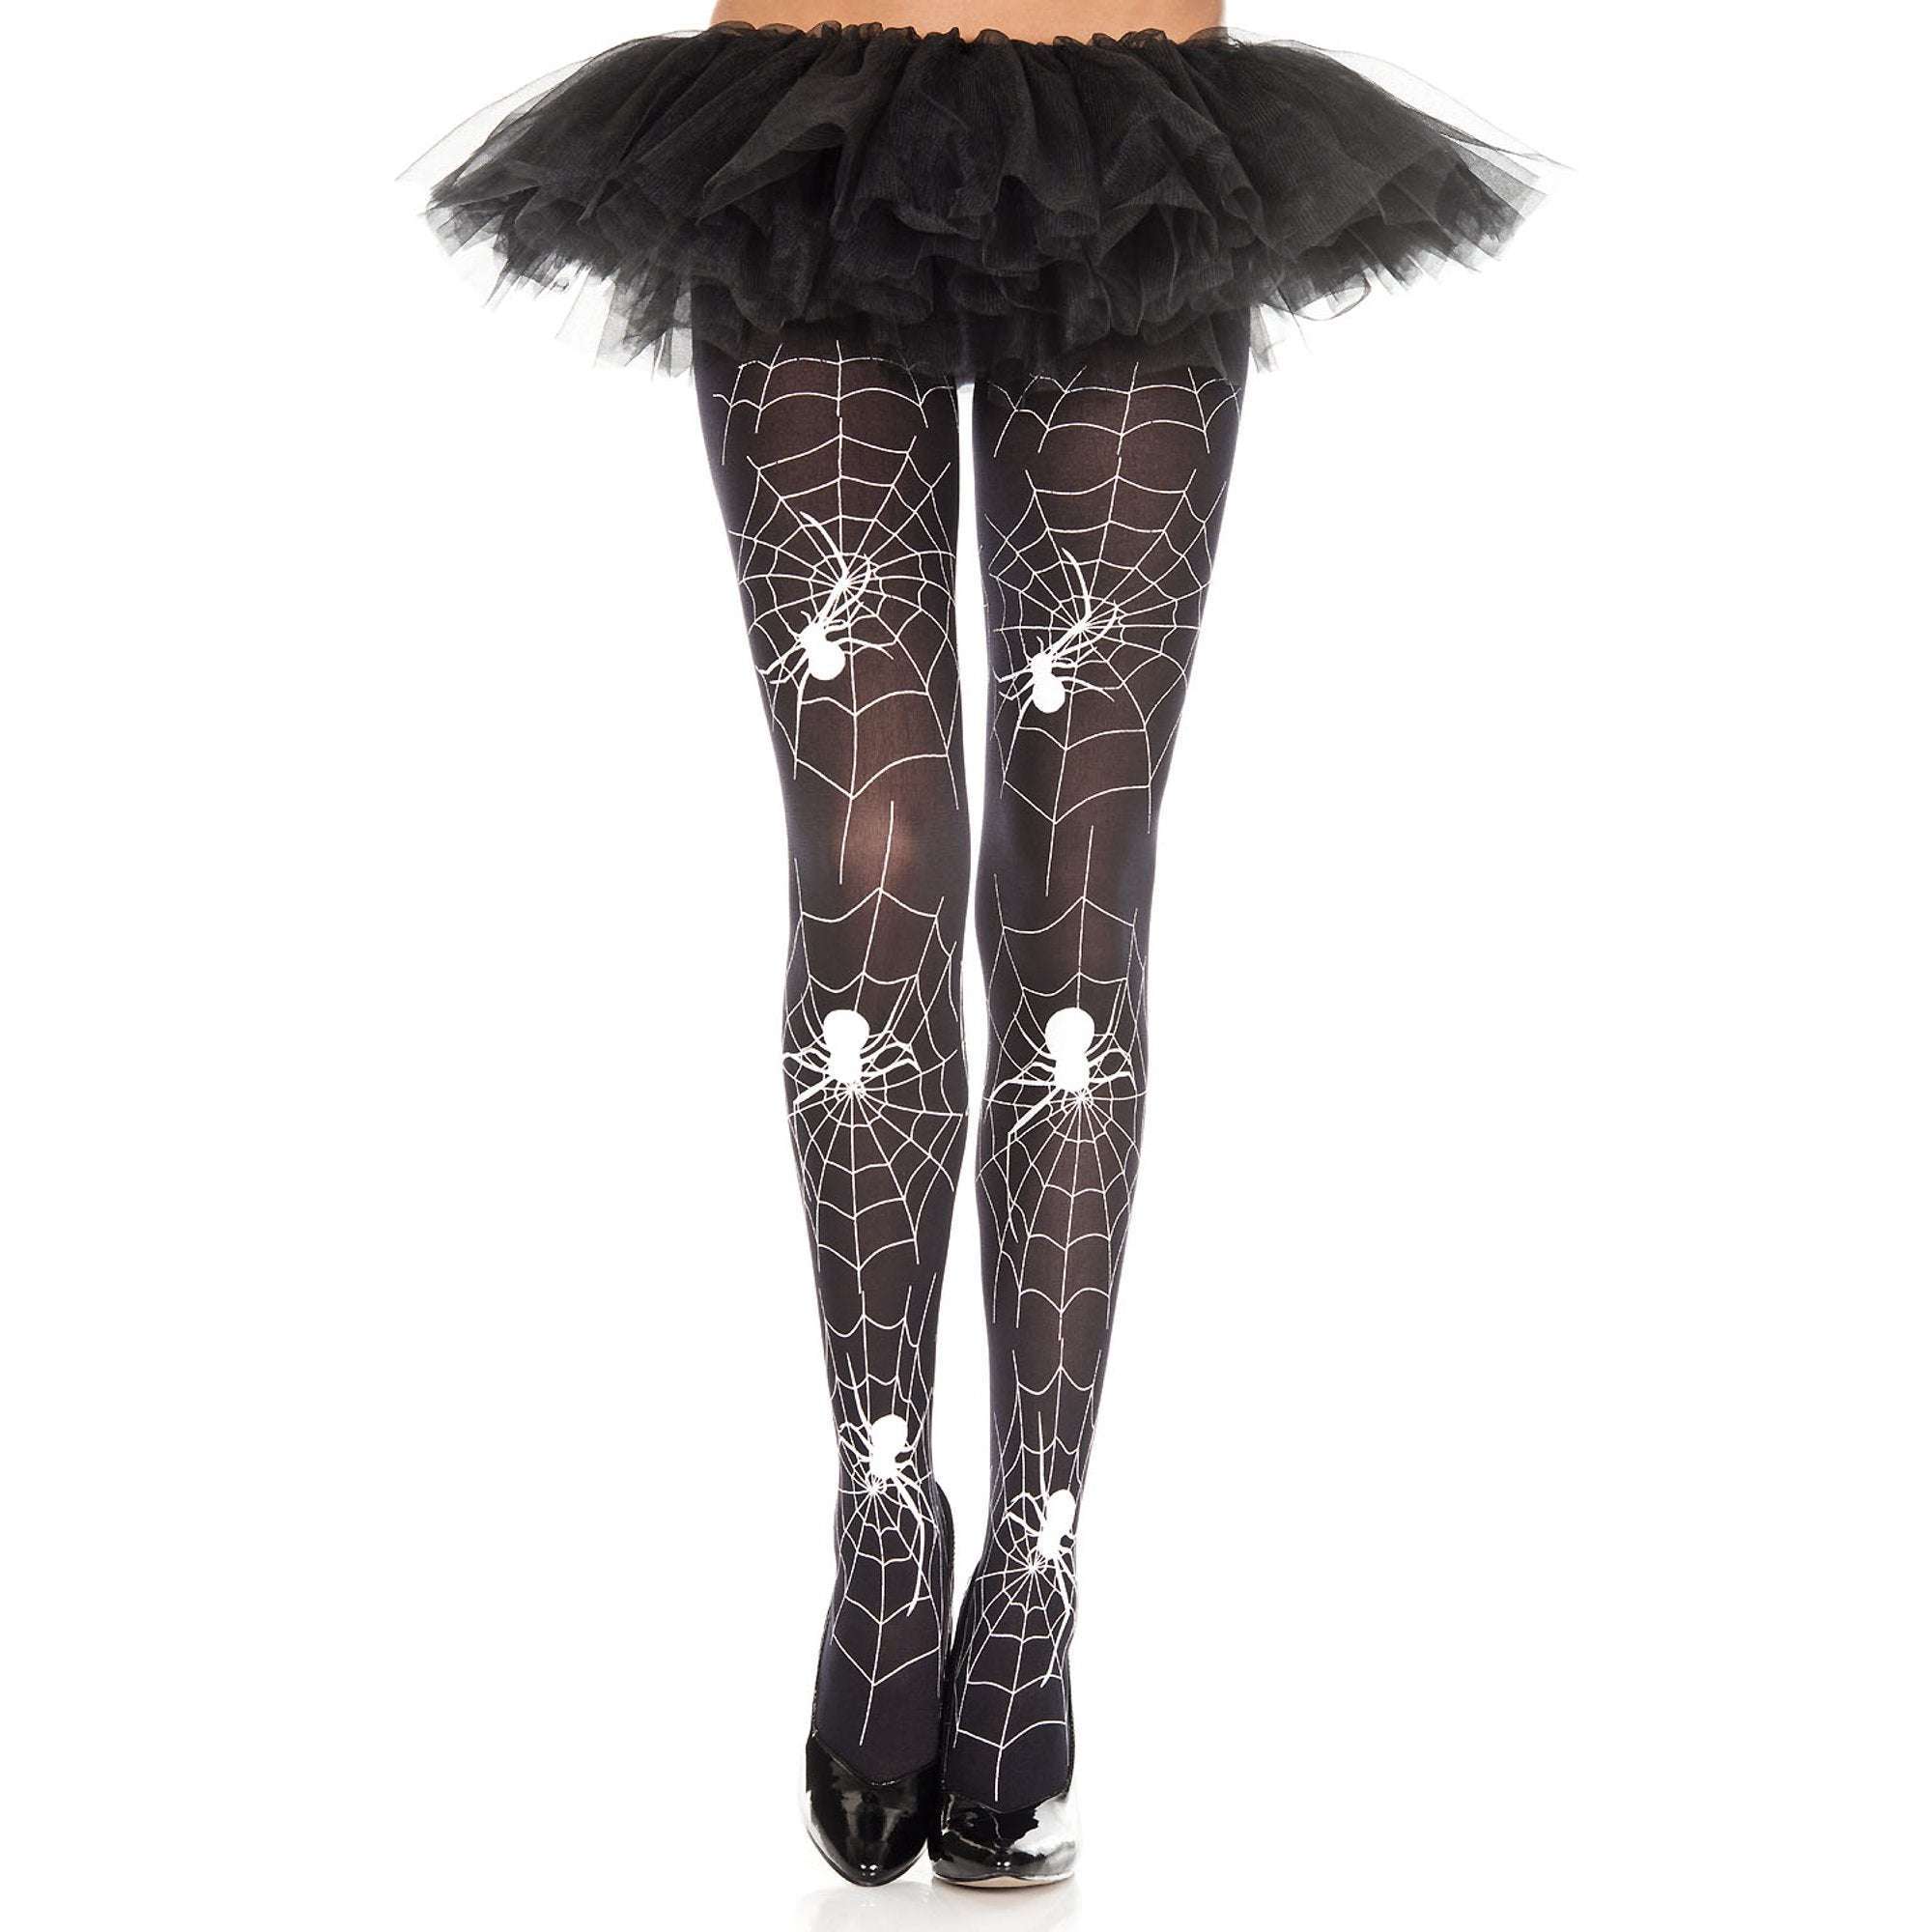 Halloween Women's Spider Web Sheer Net Costume Tights, Black, by